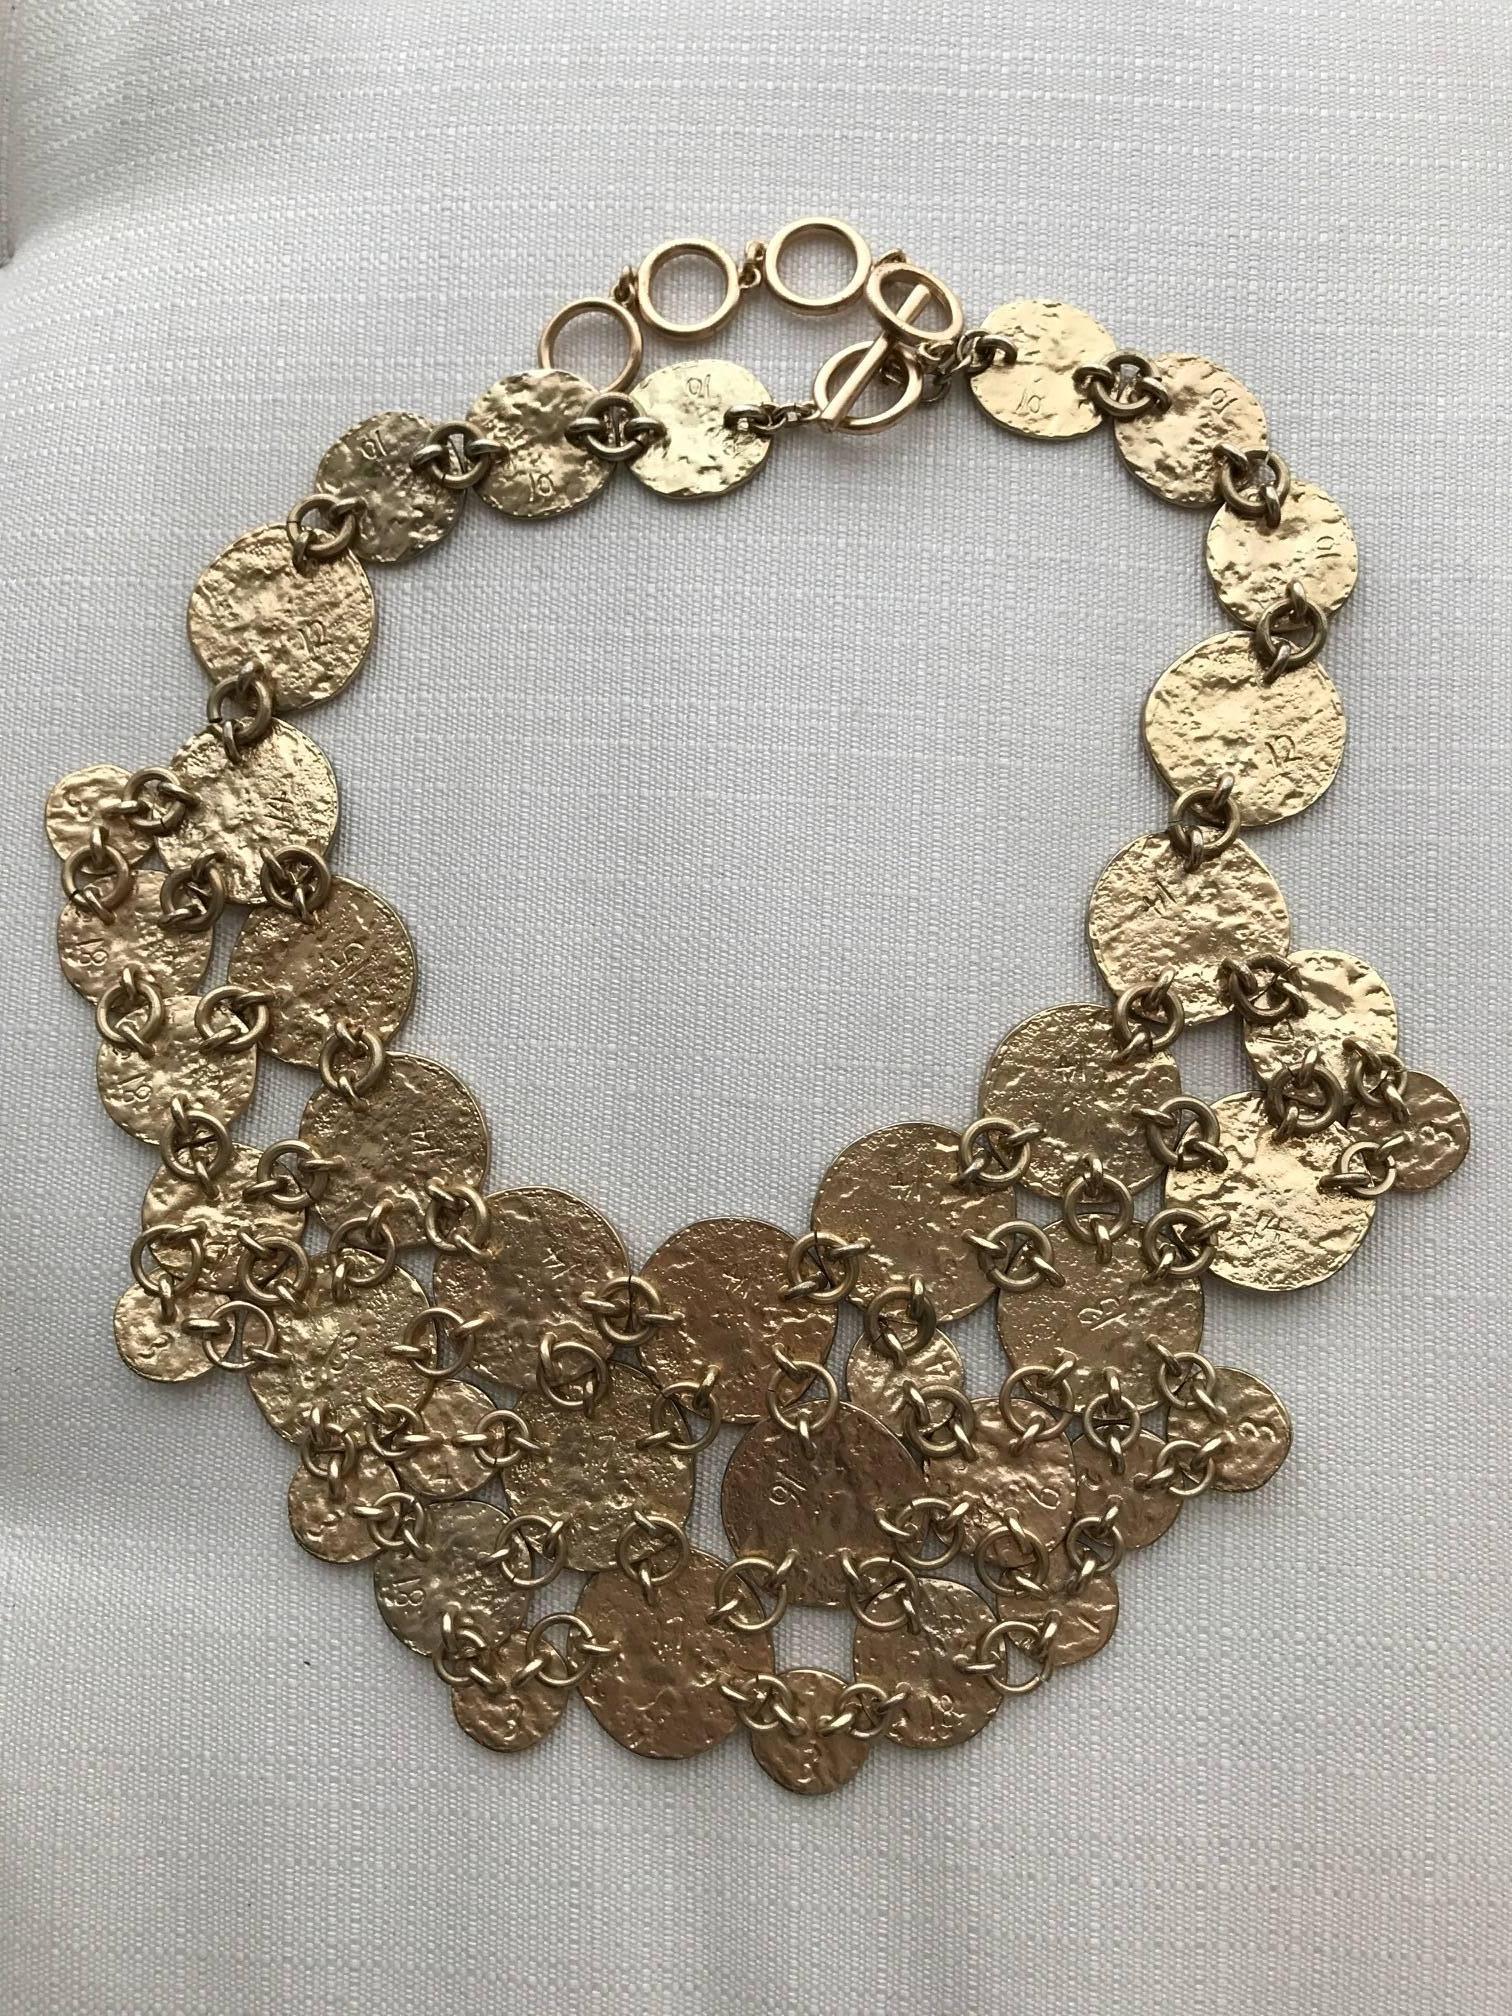 Women's 1970s Gold Disk Bib Necklace